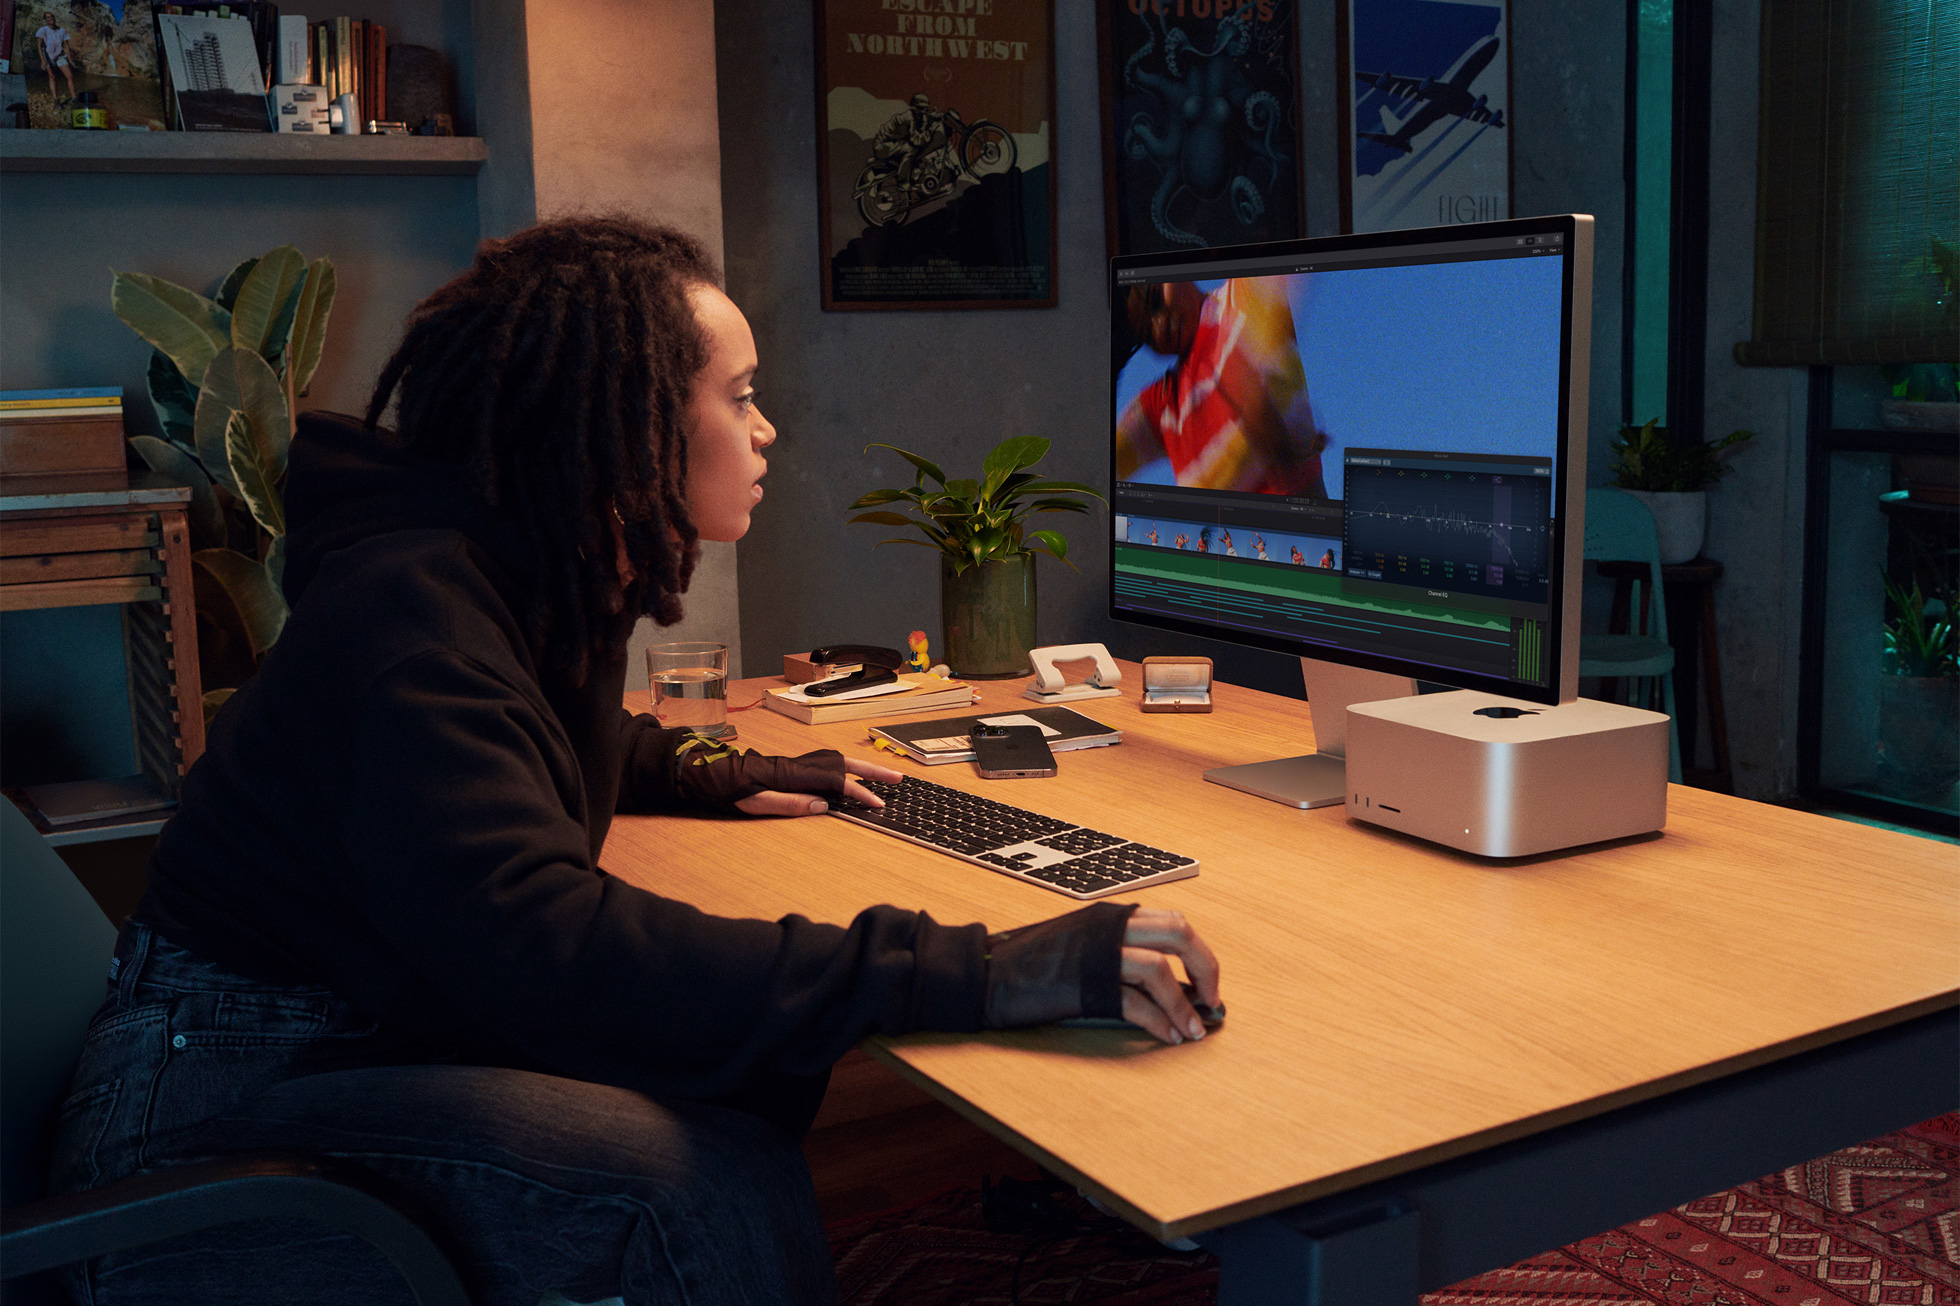 Apple Studio Display review: an ideal Mac monitor, at long last